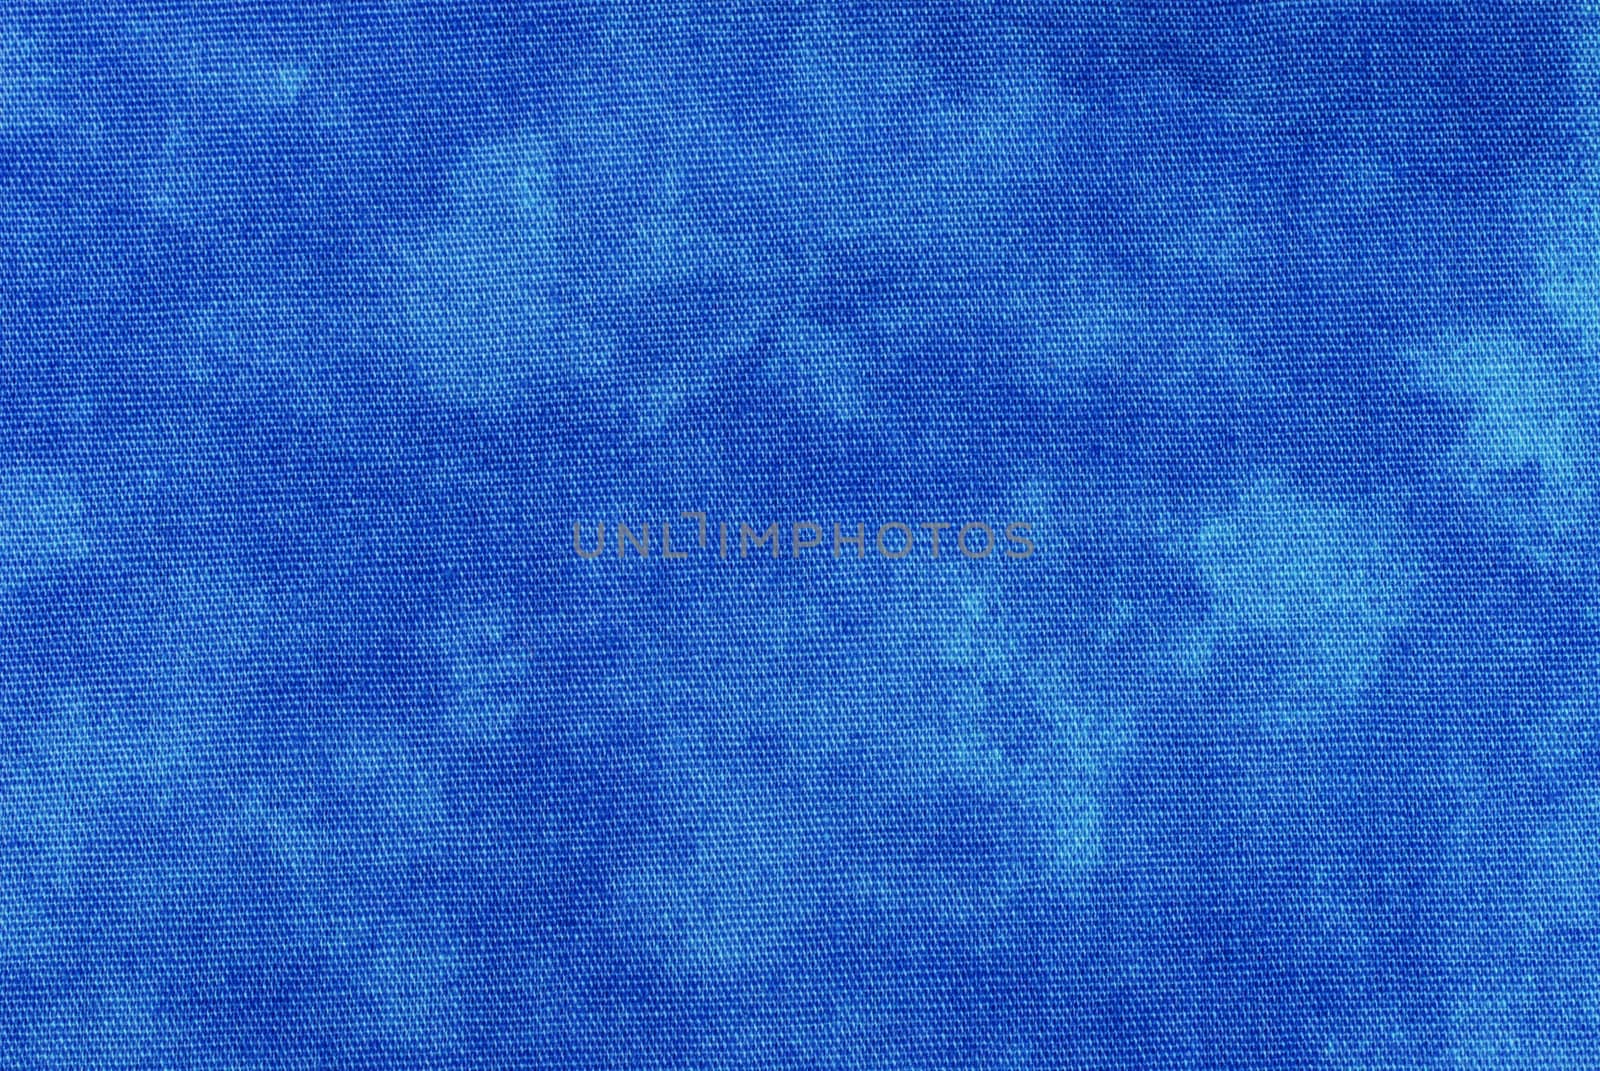 Macro of blue tye-dyed fabric for background use. 